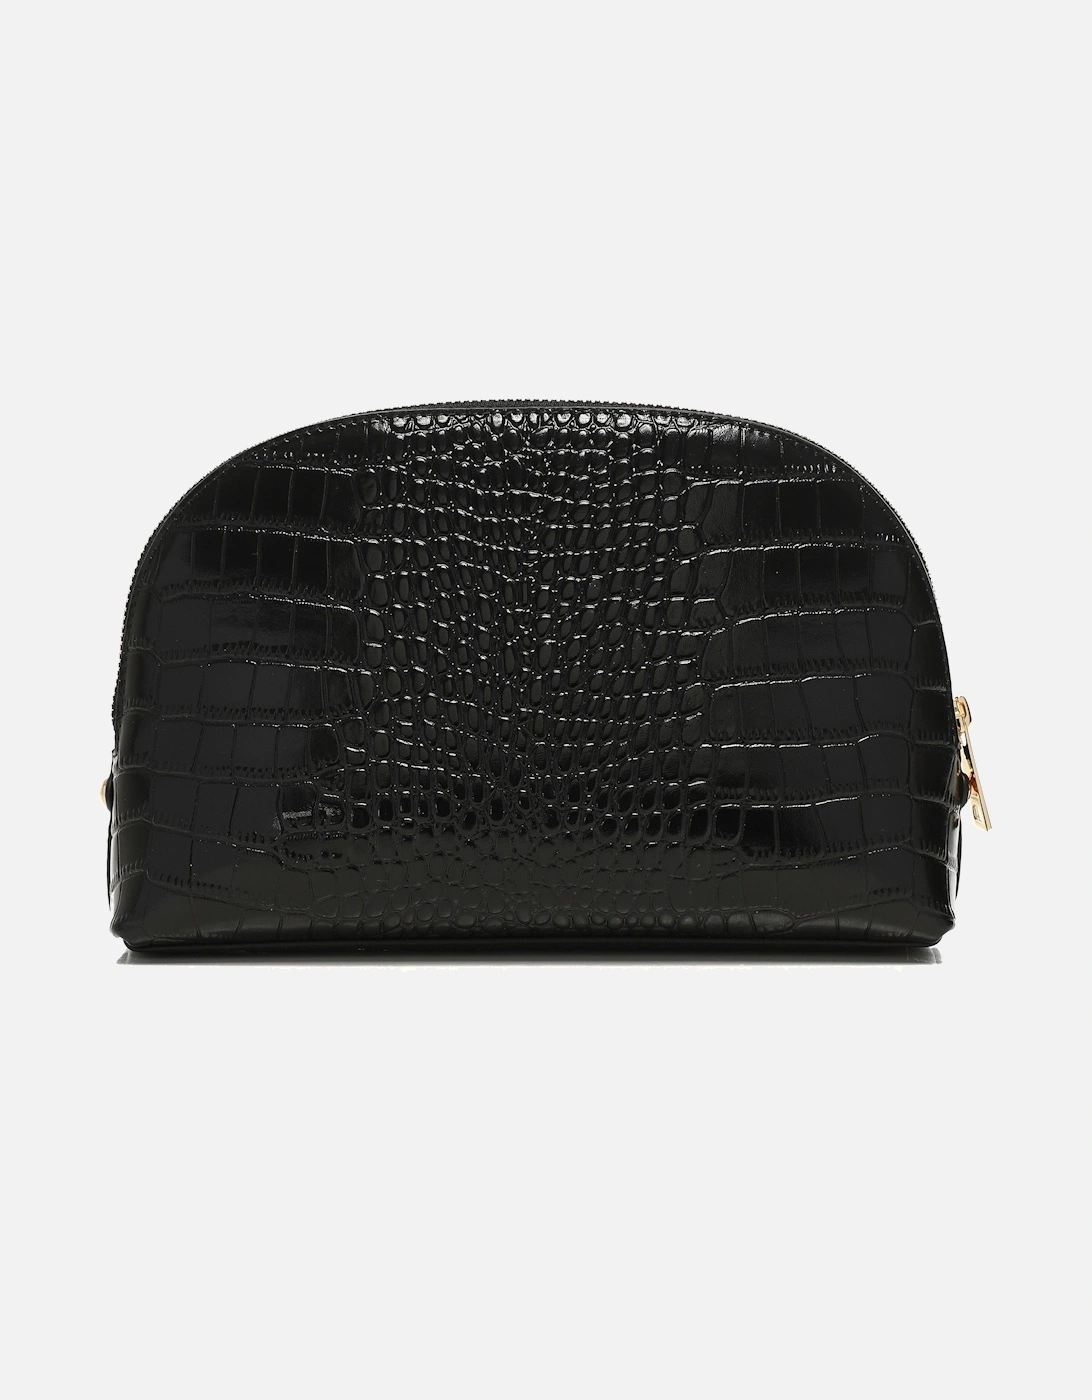 Chelsea Leather Croc Makeup Bag